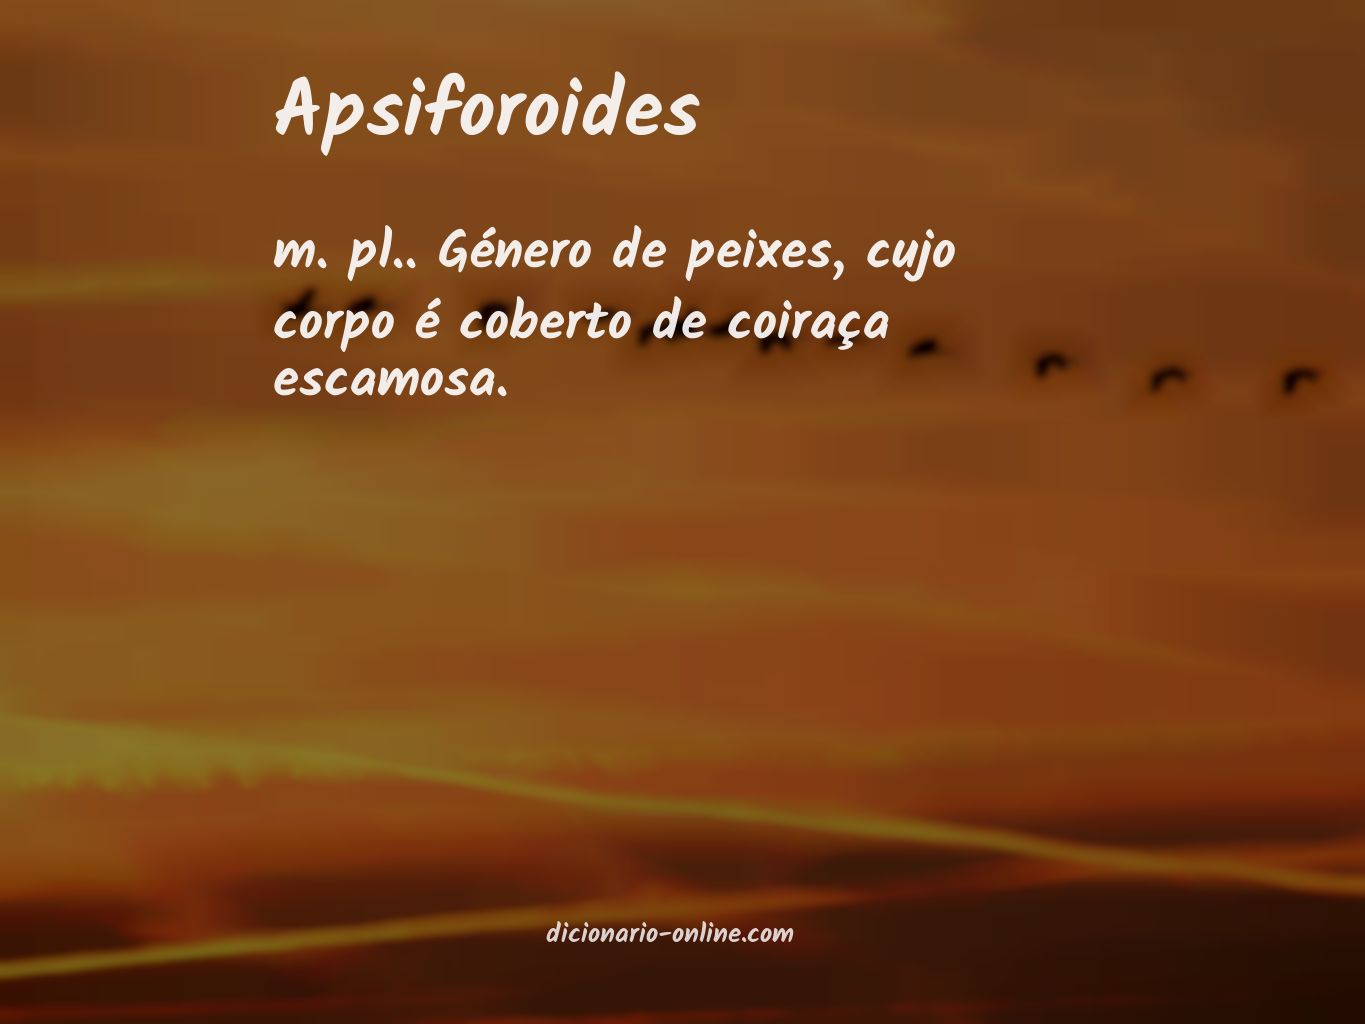 Significado de apsiforoides